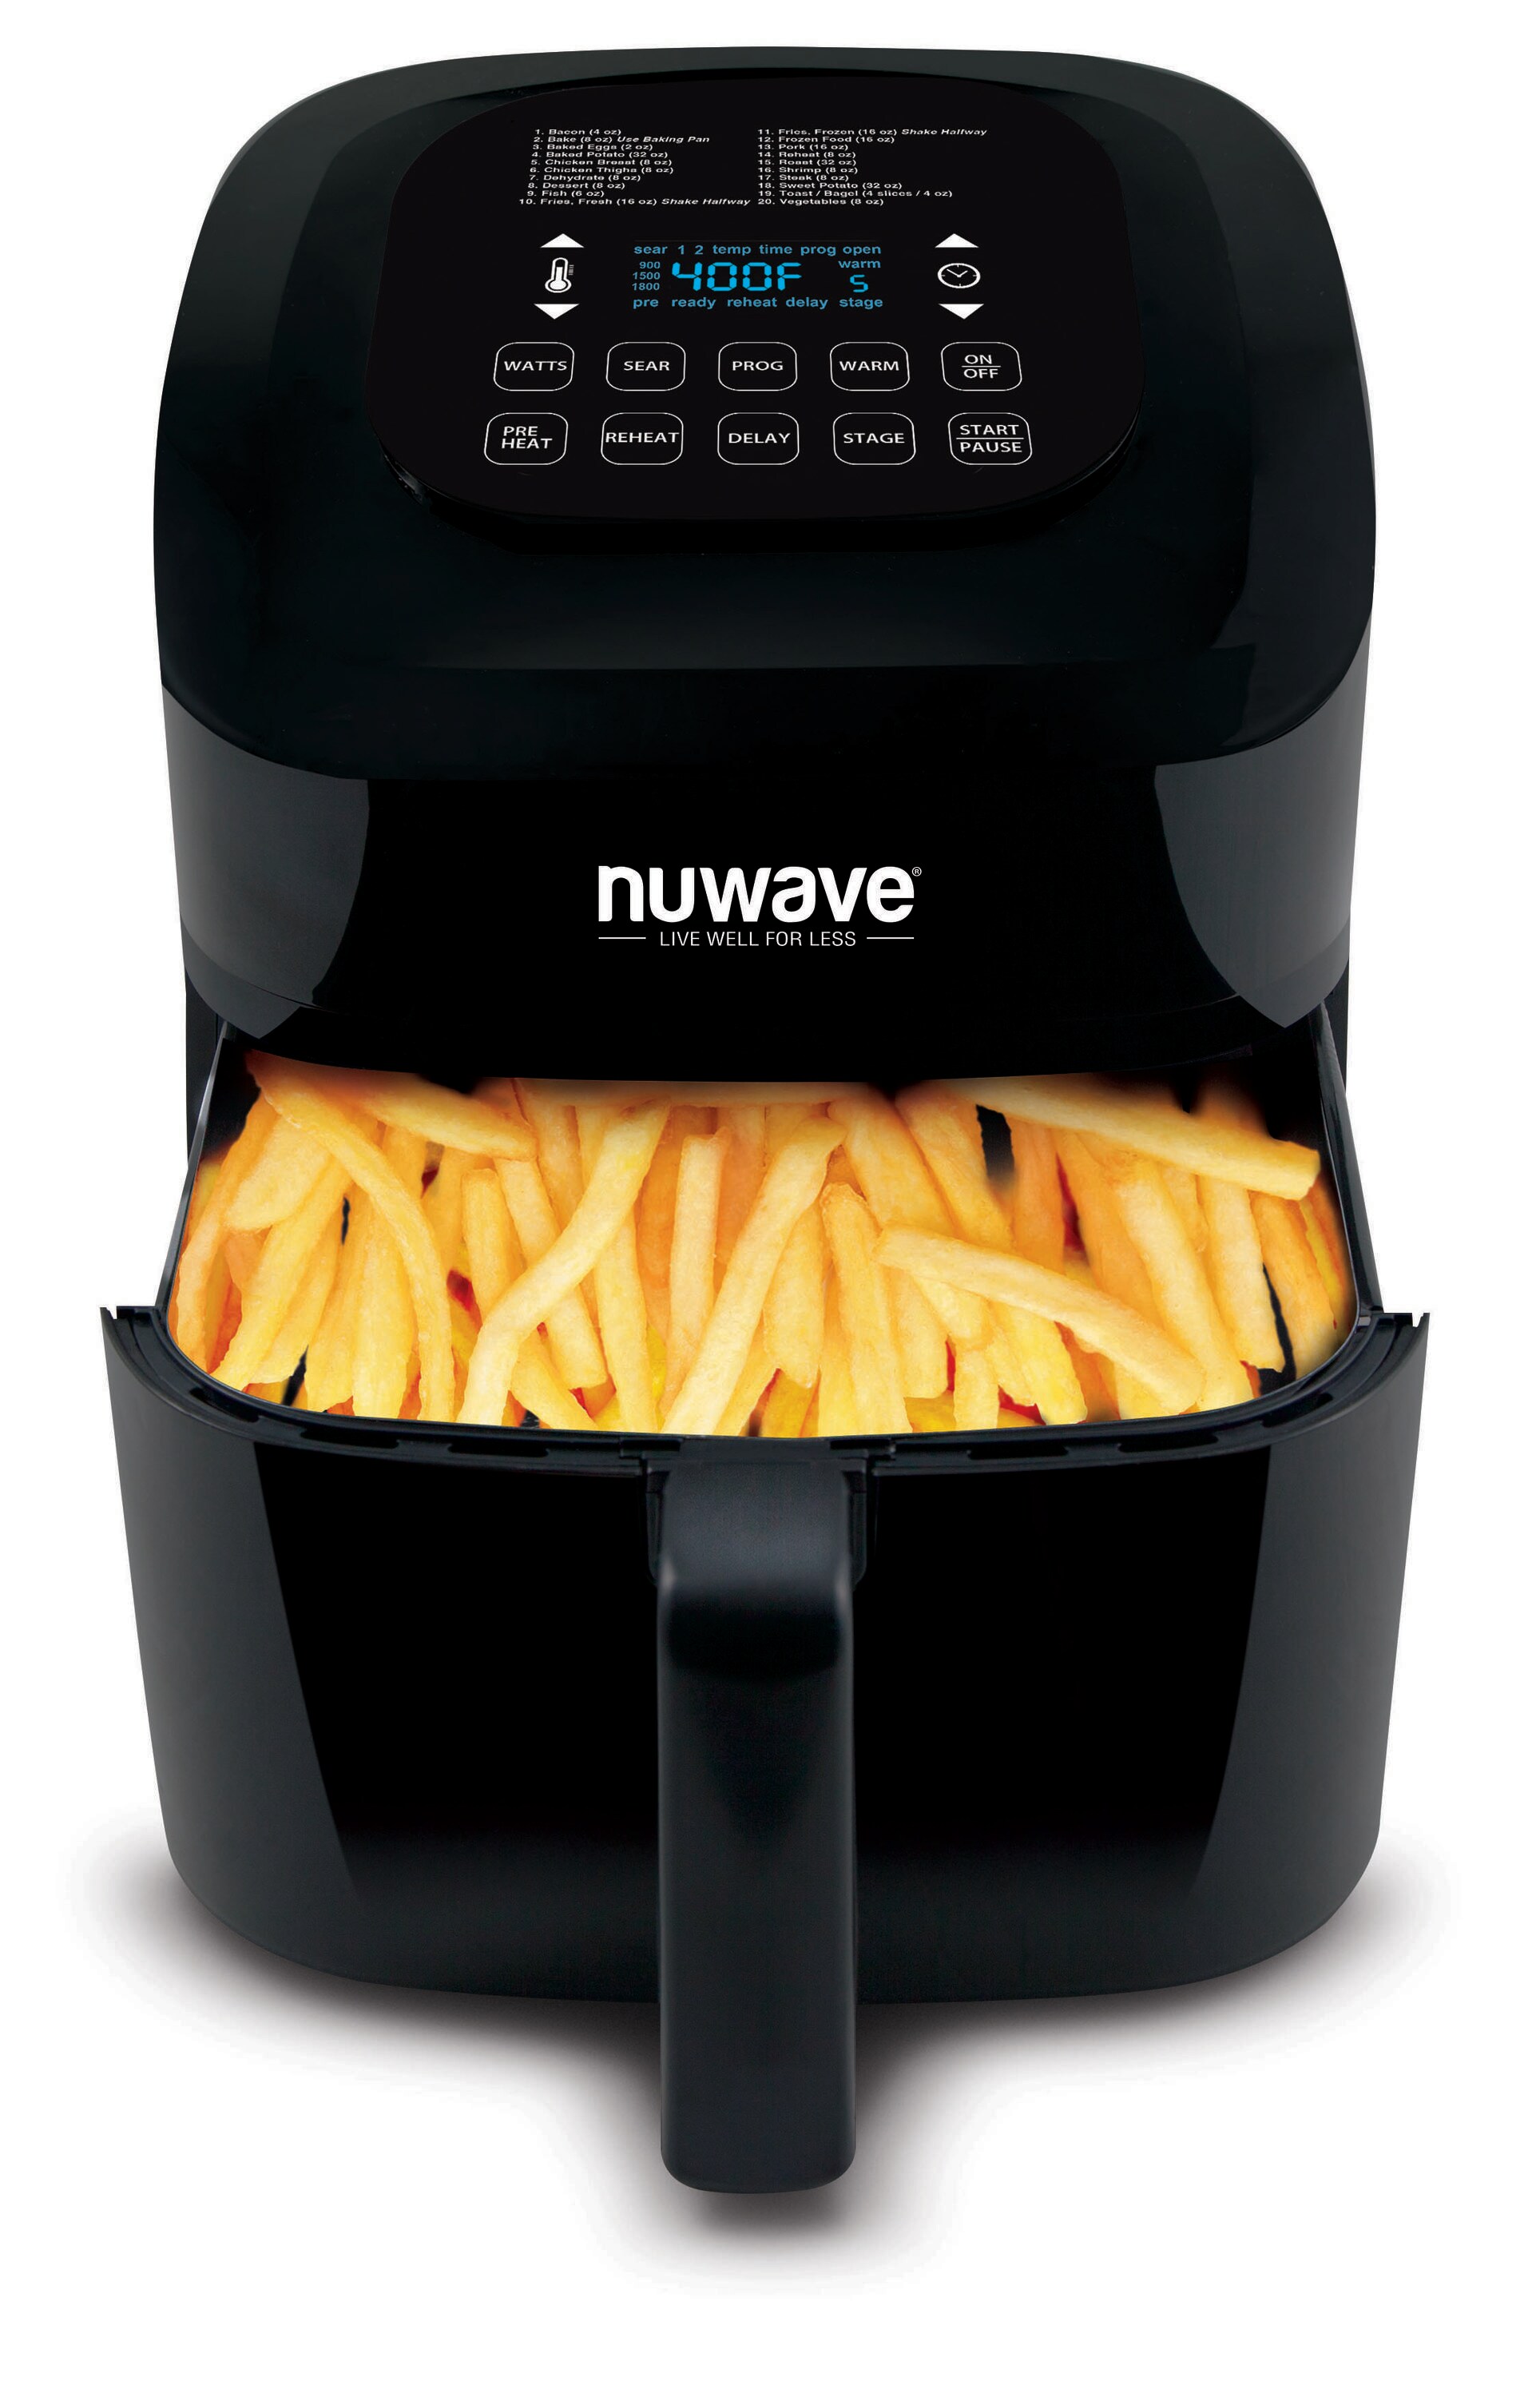 NuWave 6-Quart Black Air Fryer at